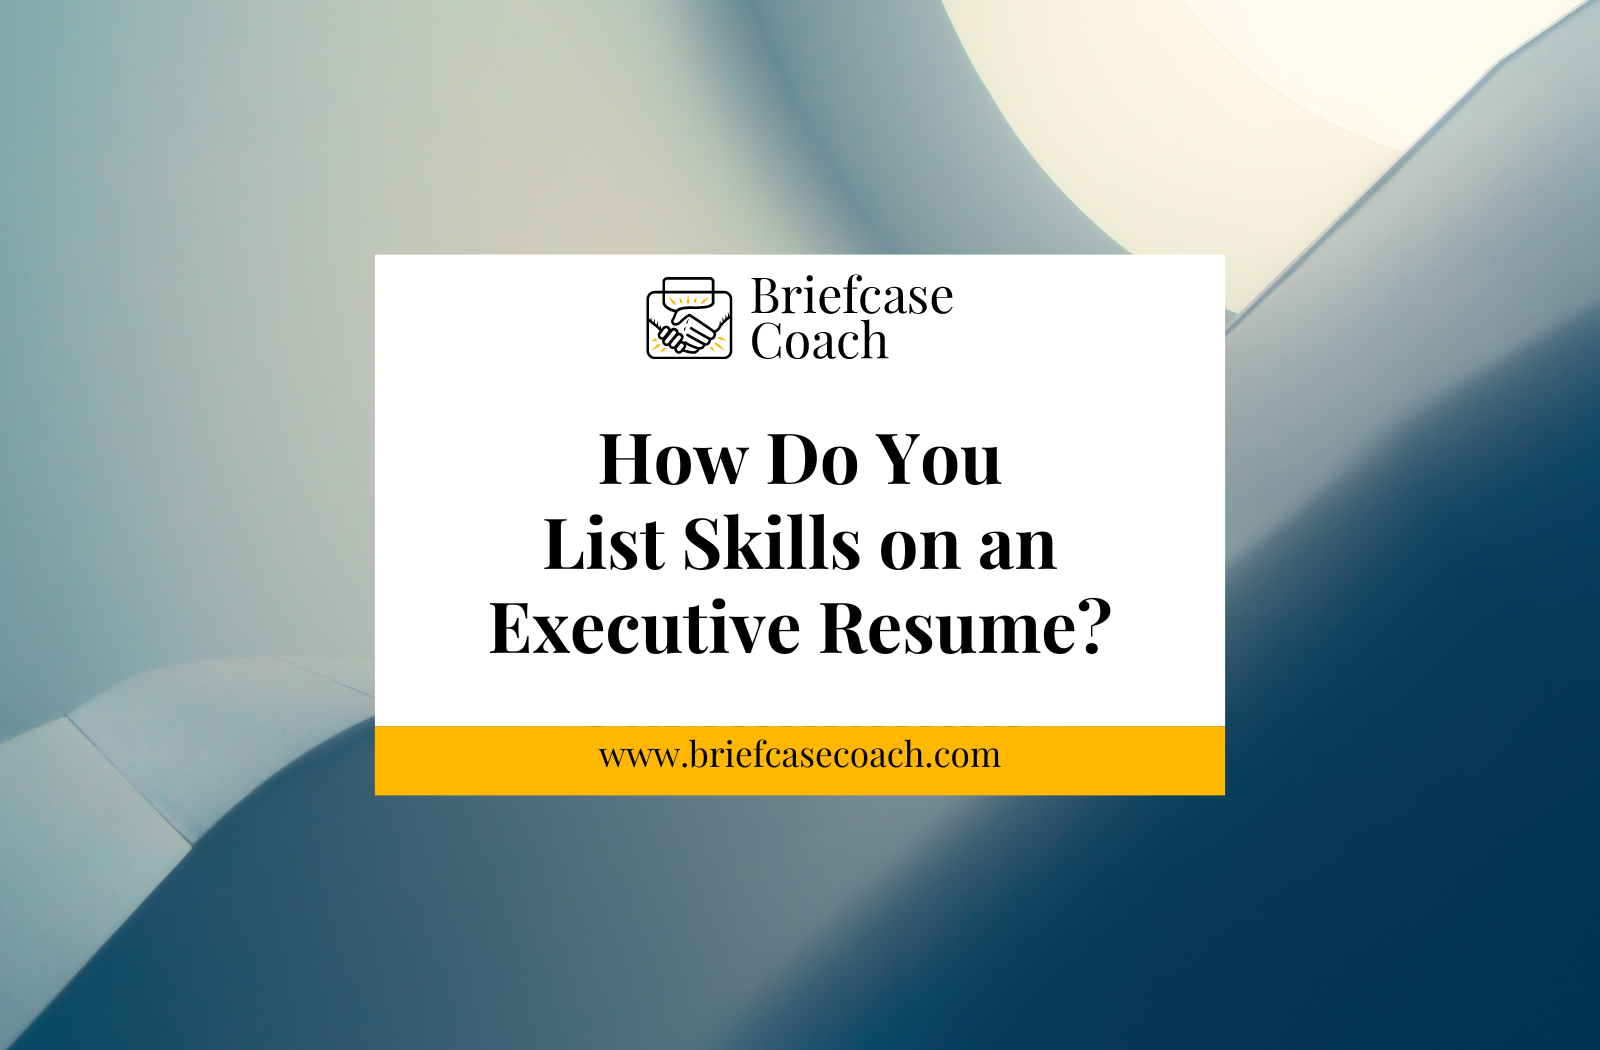 How Do You List Skills on an Executive Resume?